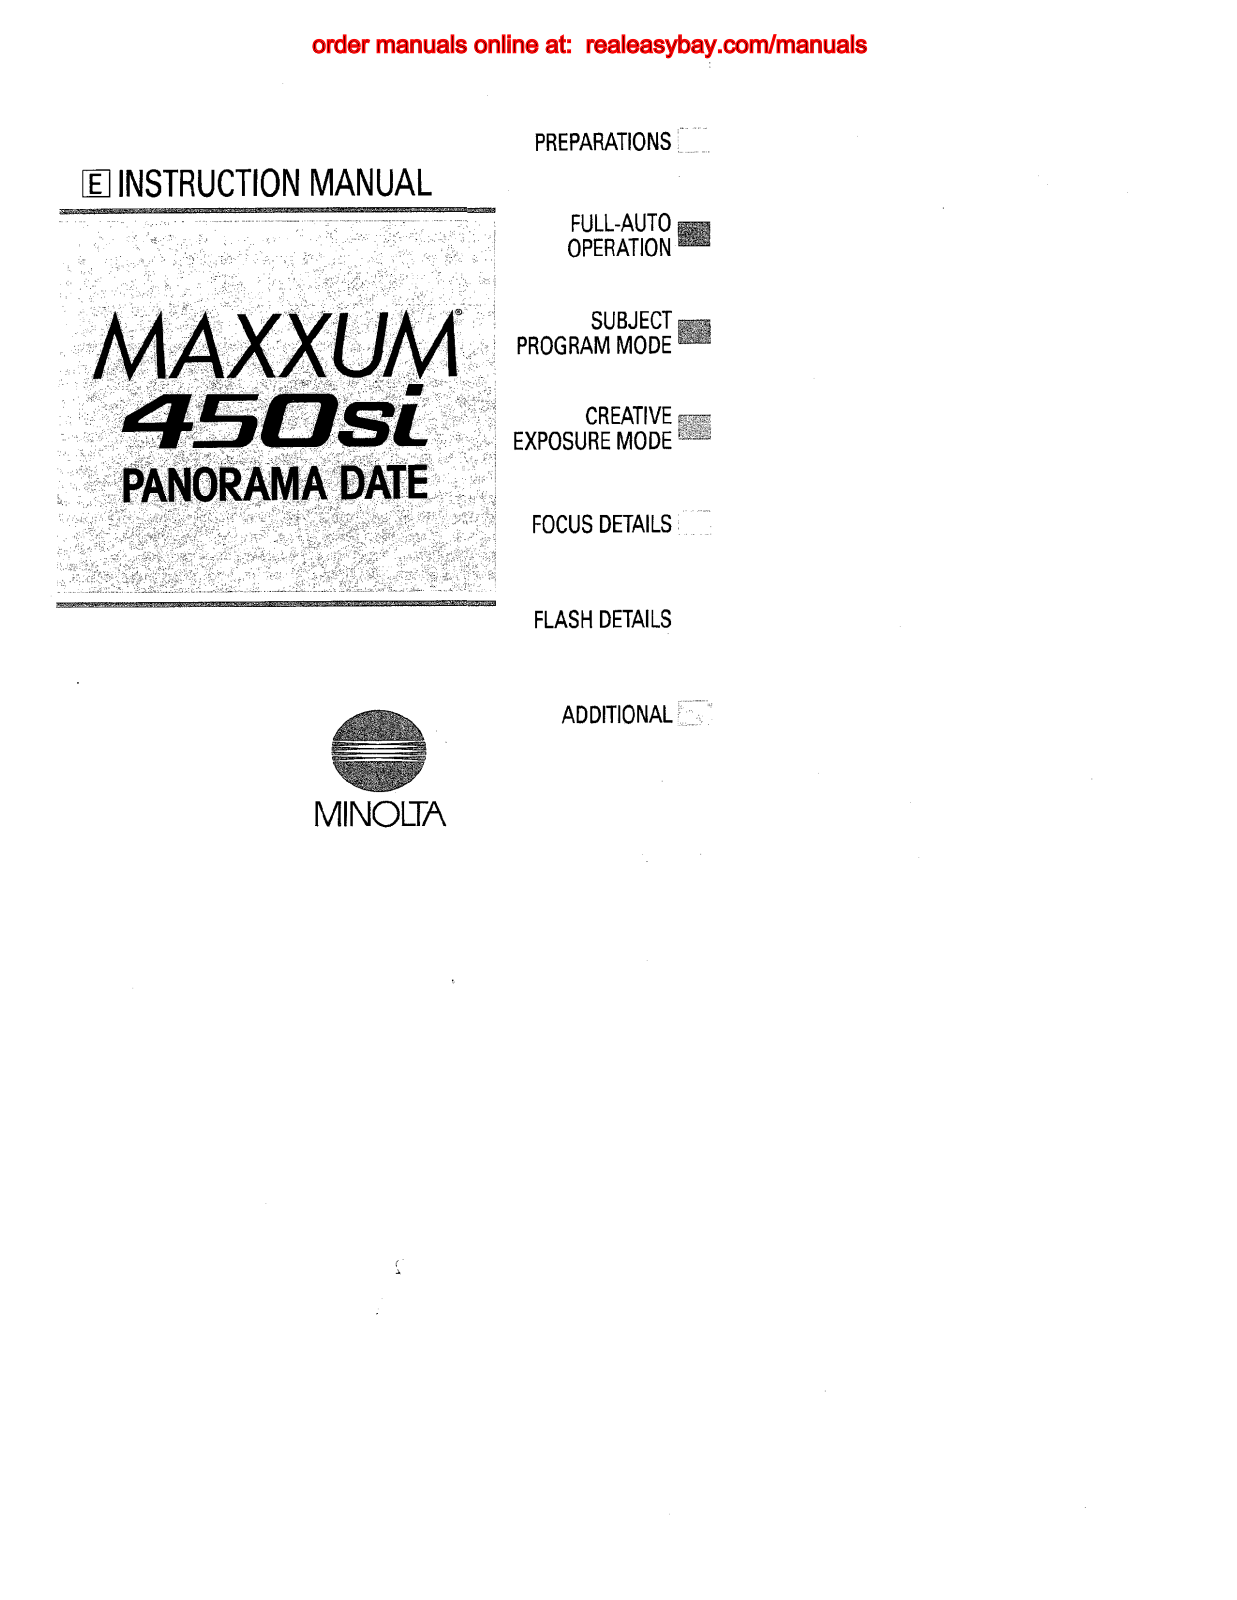 Minolta MAXXUM 450SI instruction Manual